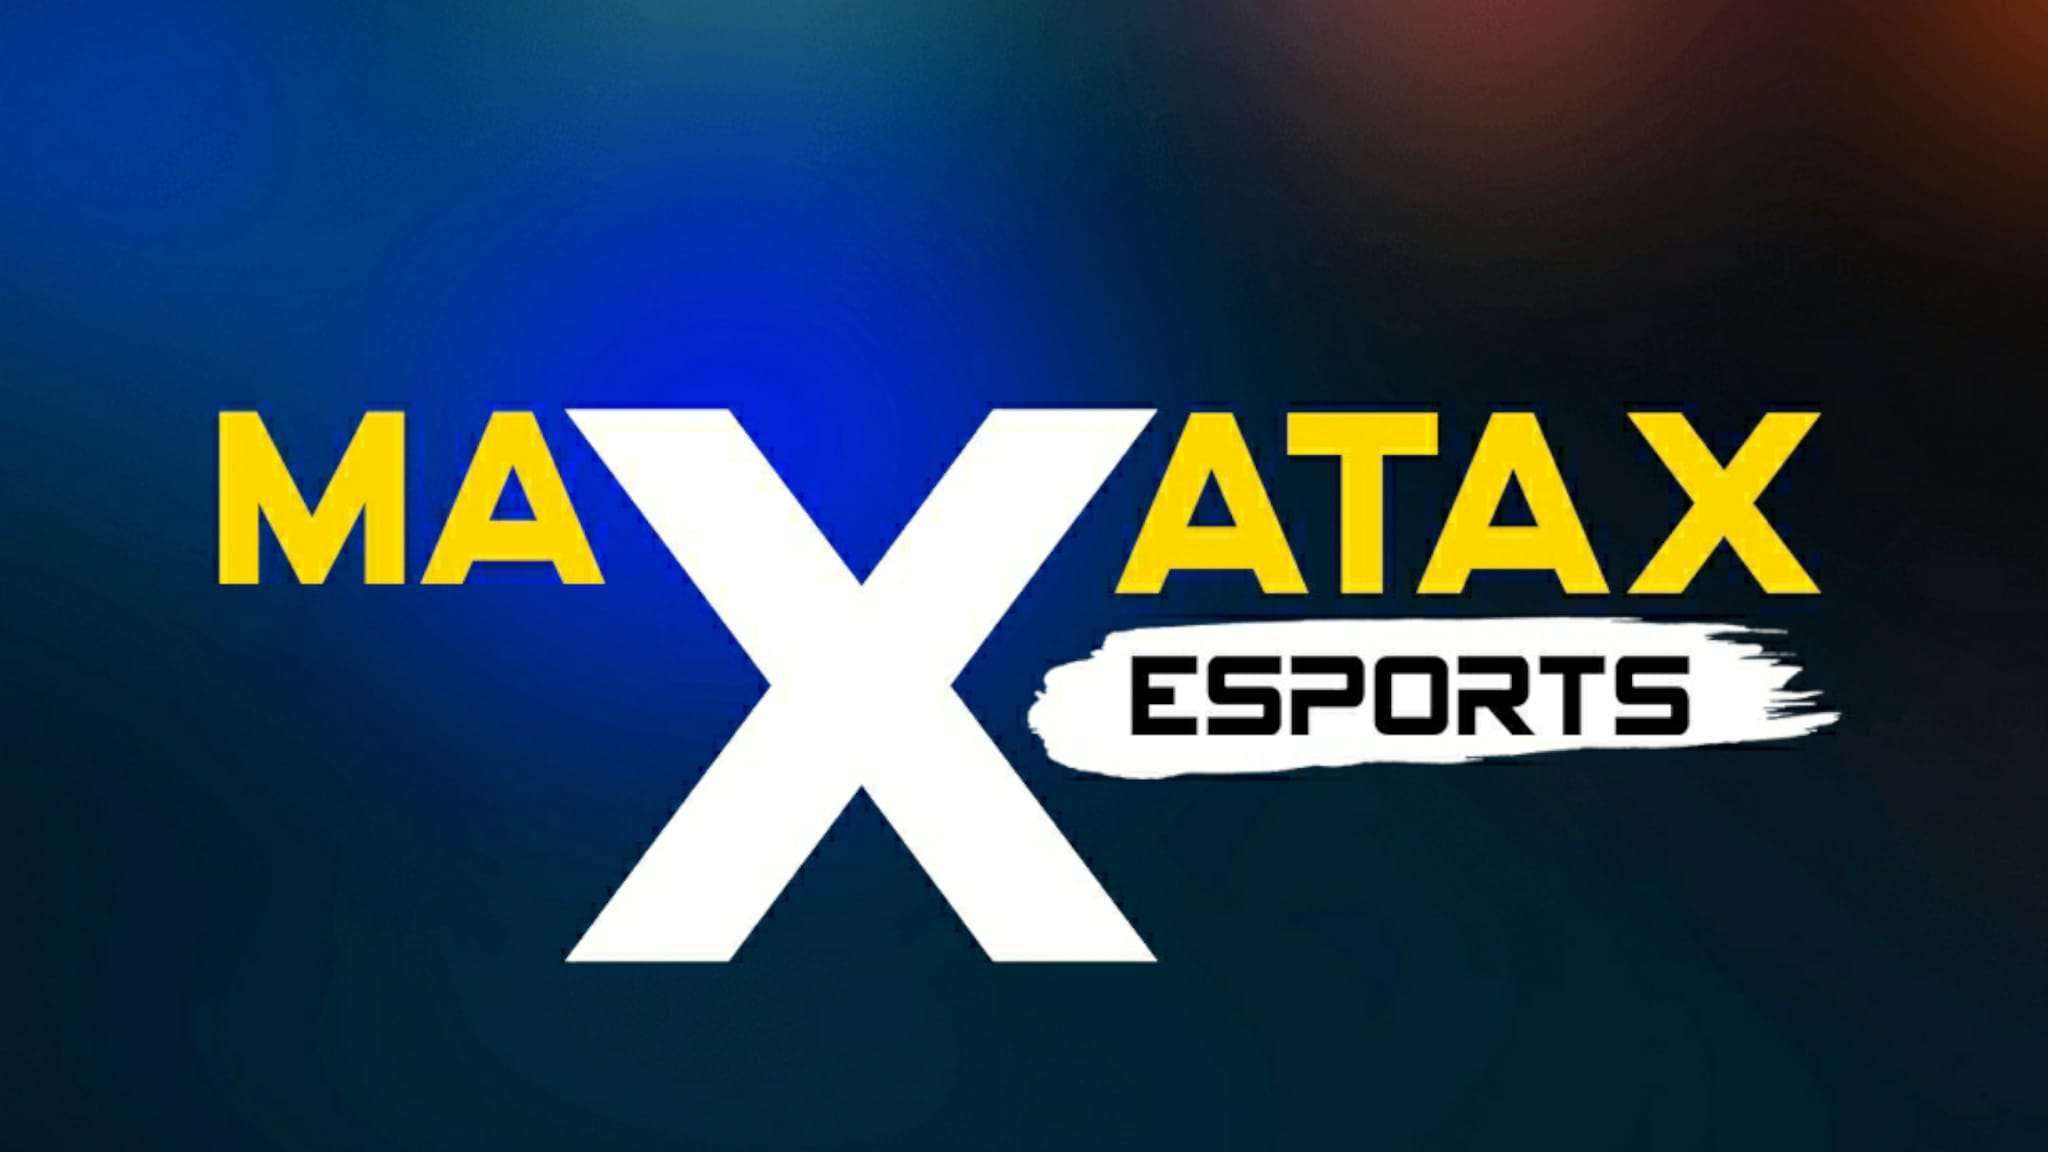 MaXATaX Esports